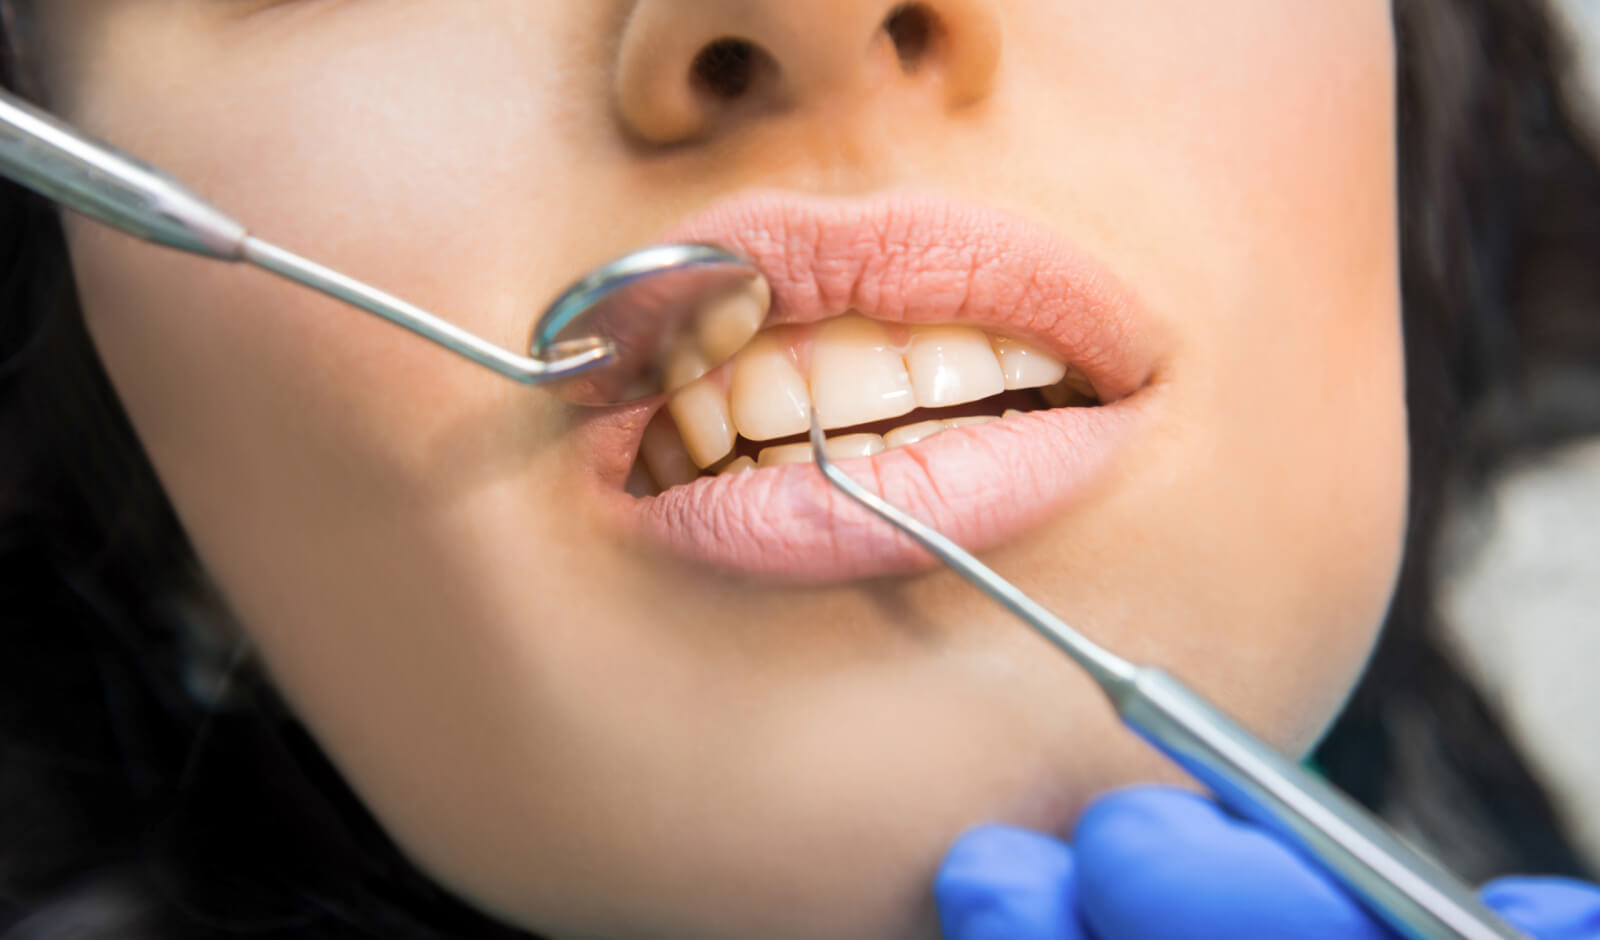 endodoncia clinica dental dentinos